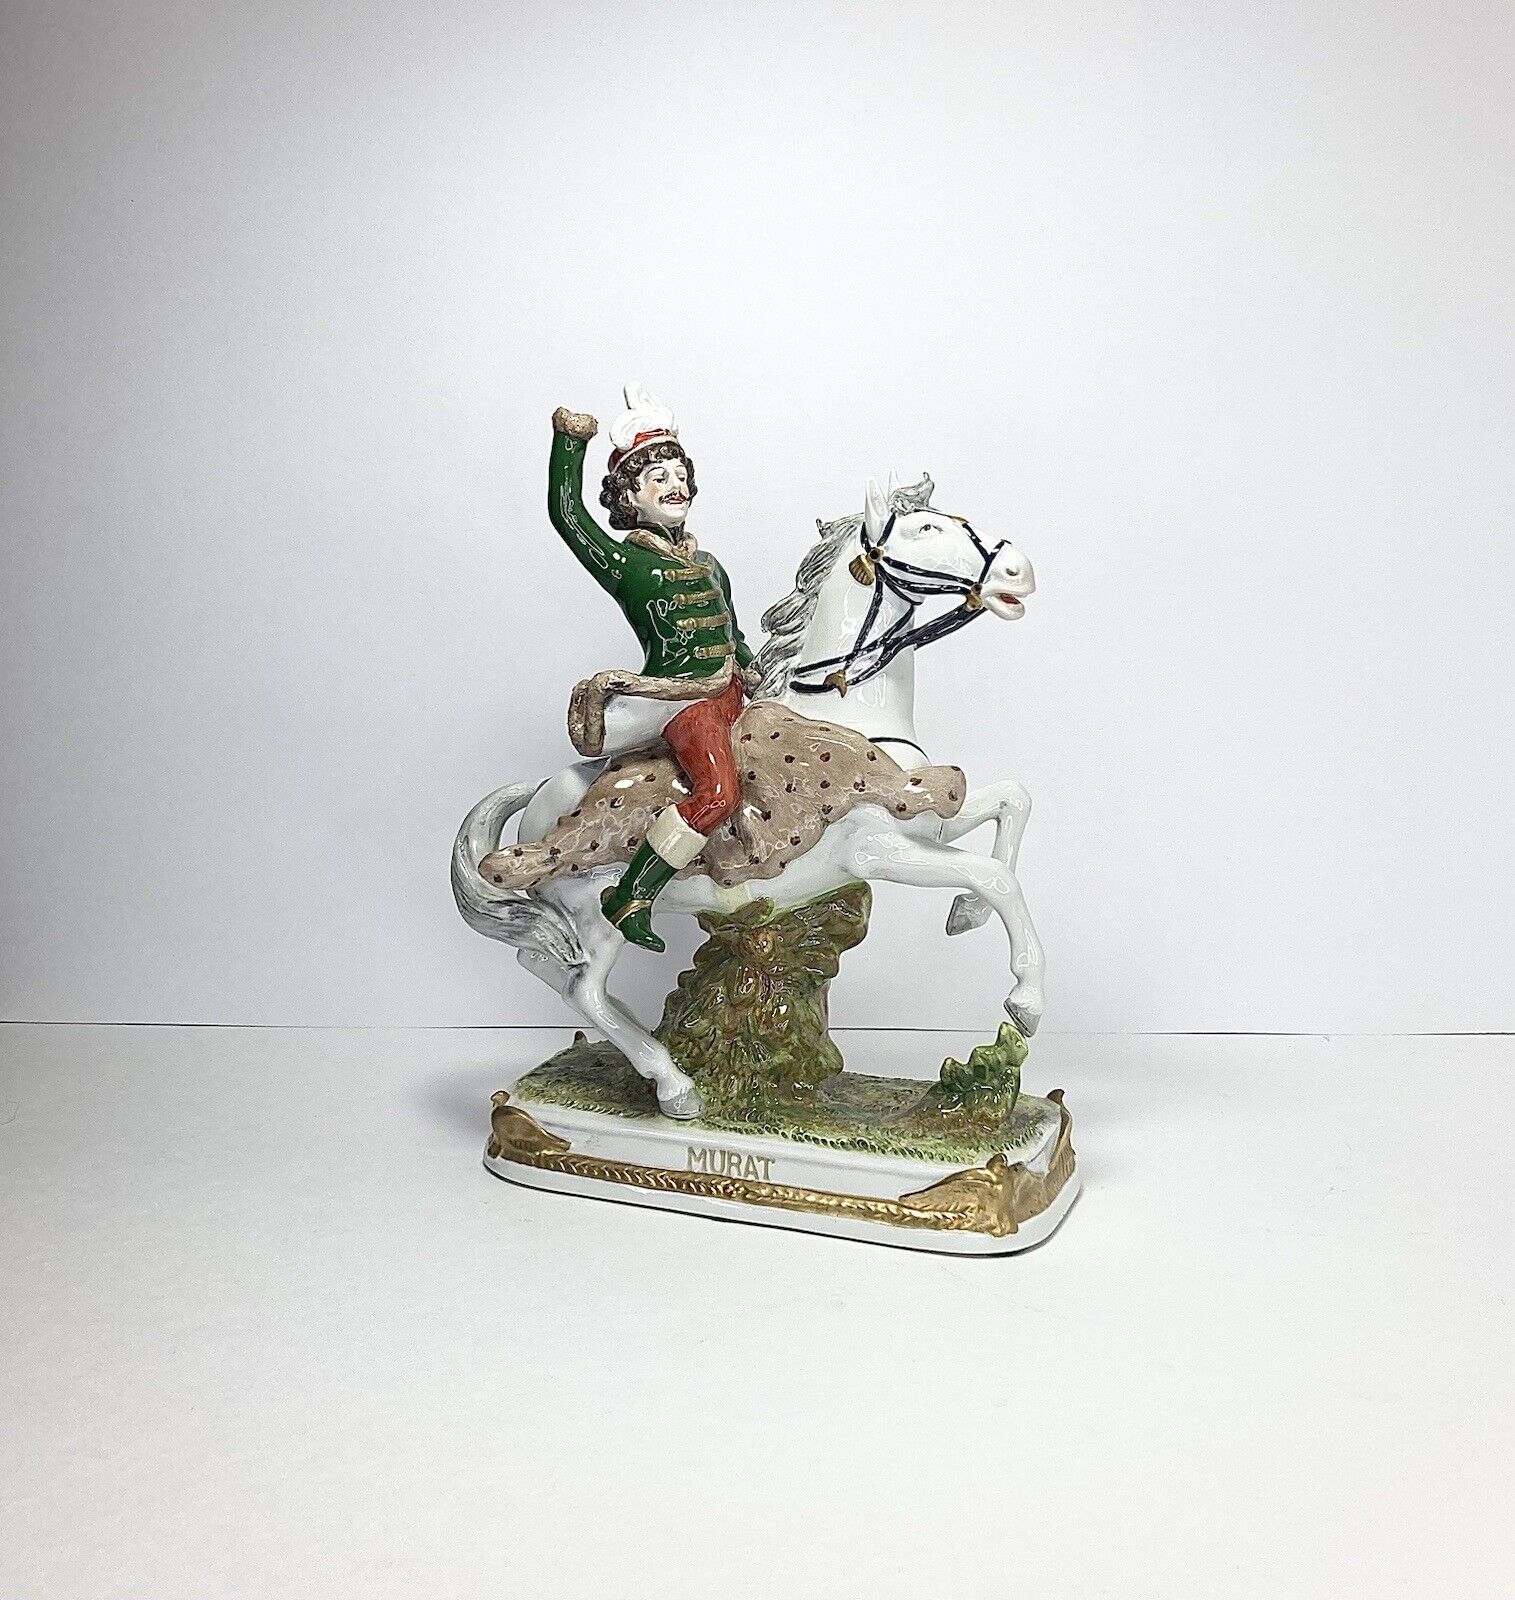 Scheibe-Alsbach Kister Antique Porcelain Napoleonic Murat Soldier Figurine 11.5”